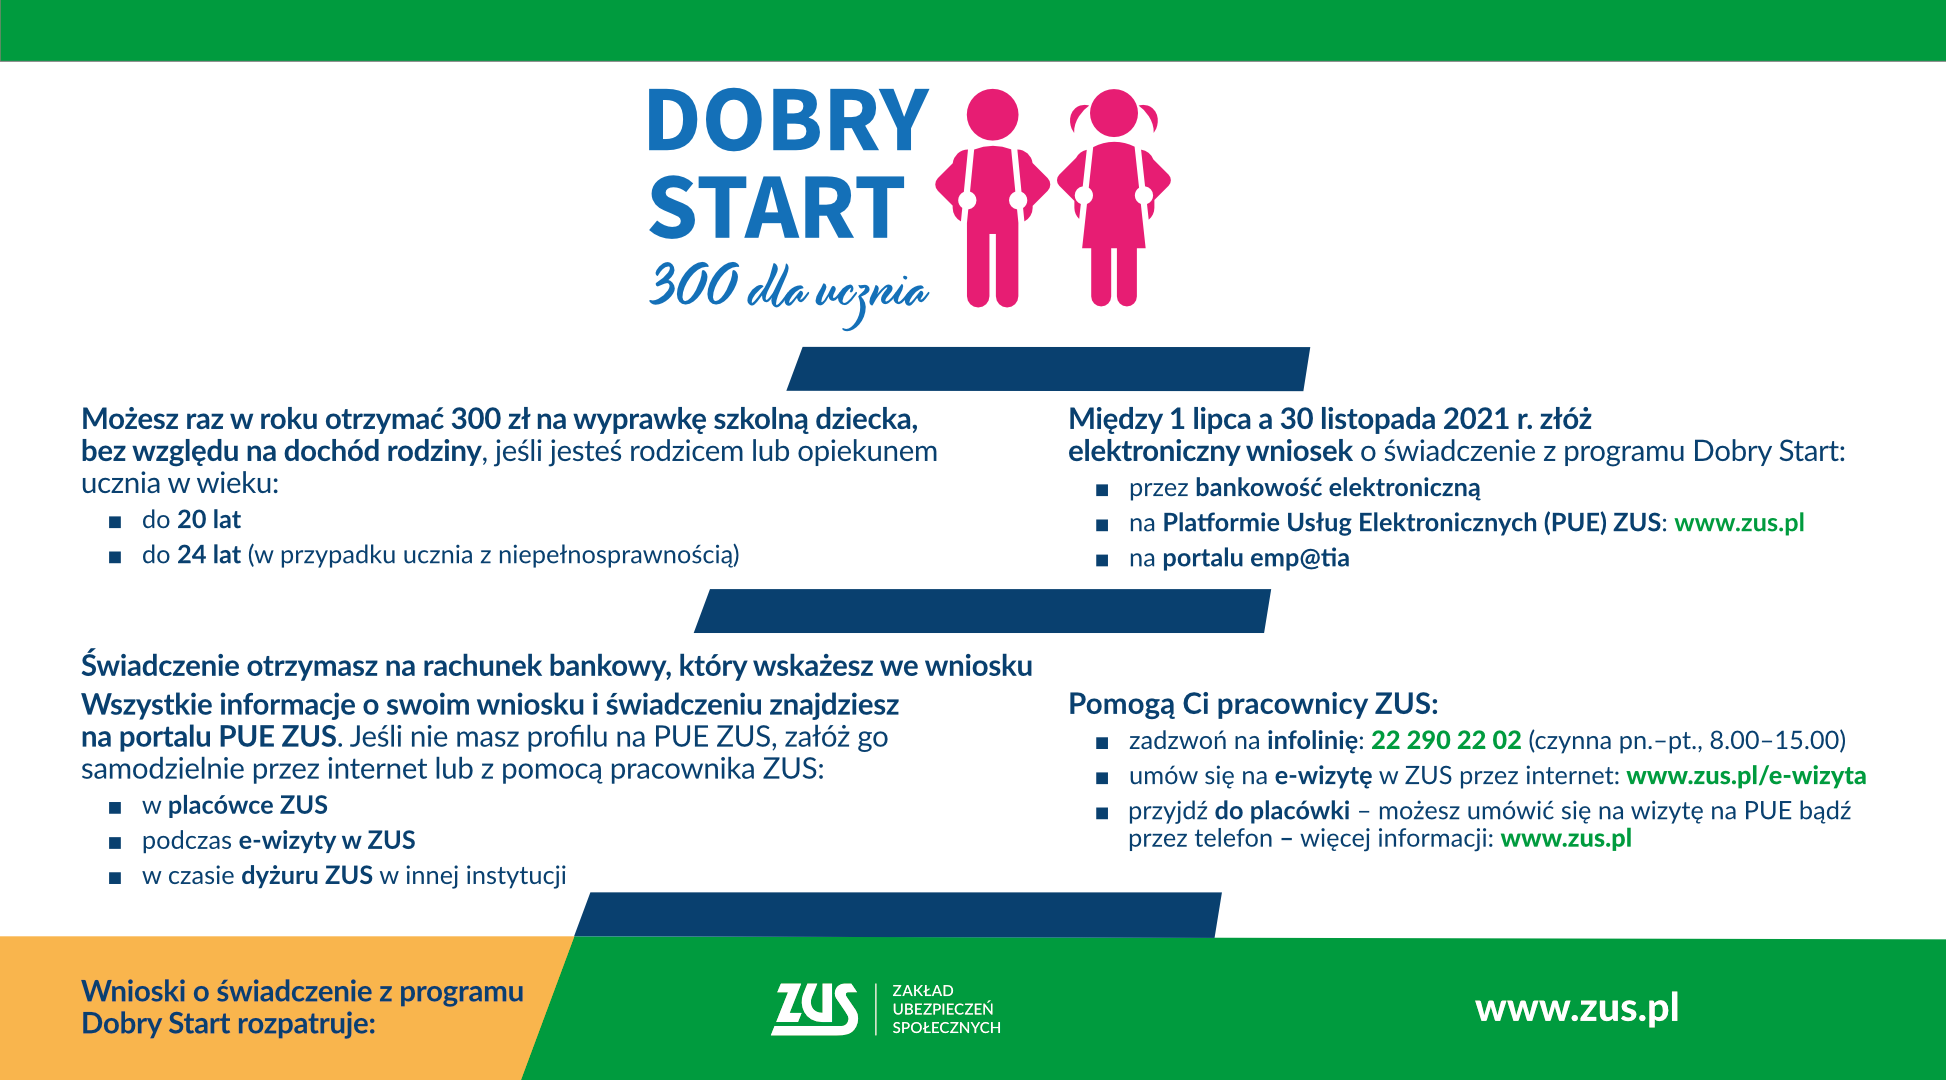 infografika Dobry Start 300 info oglne 2